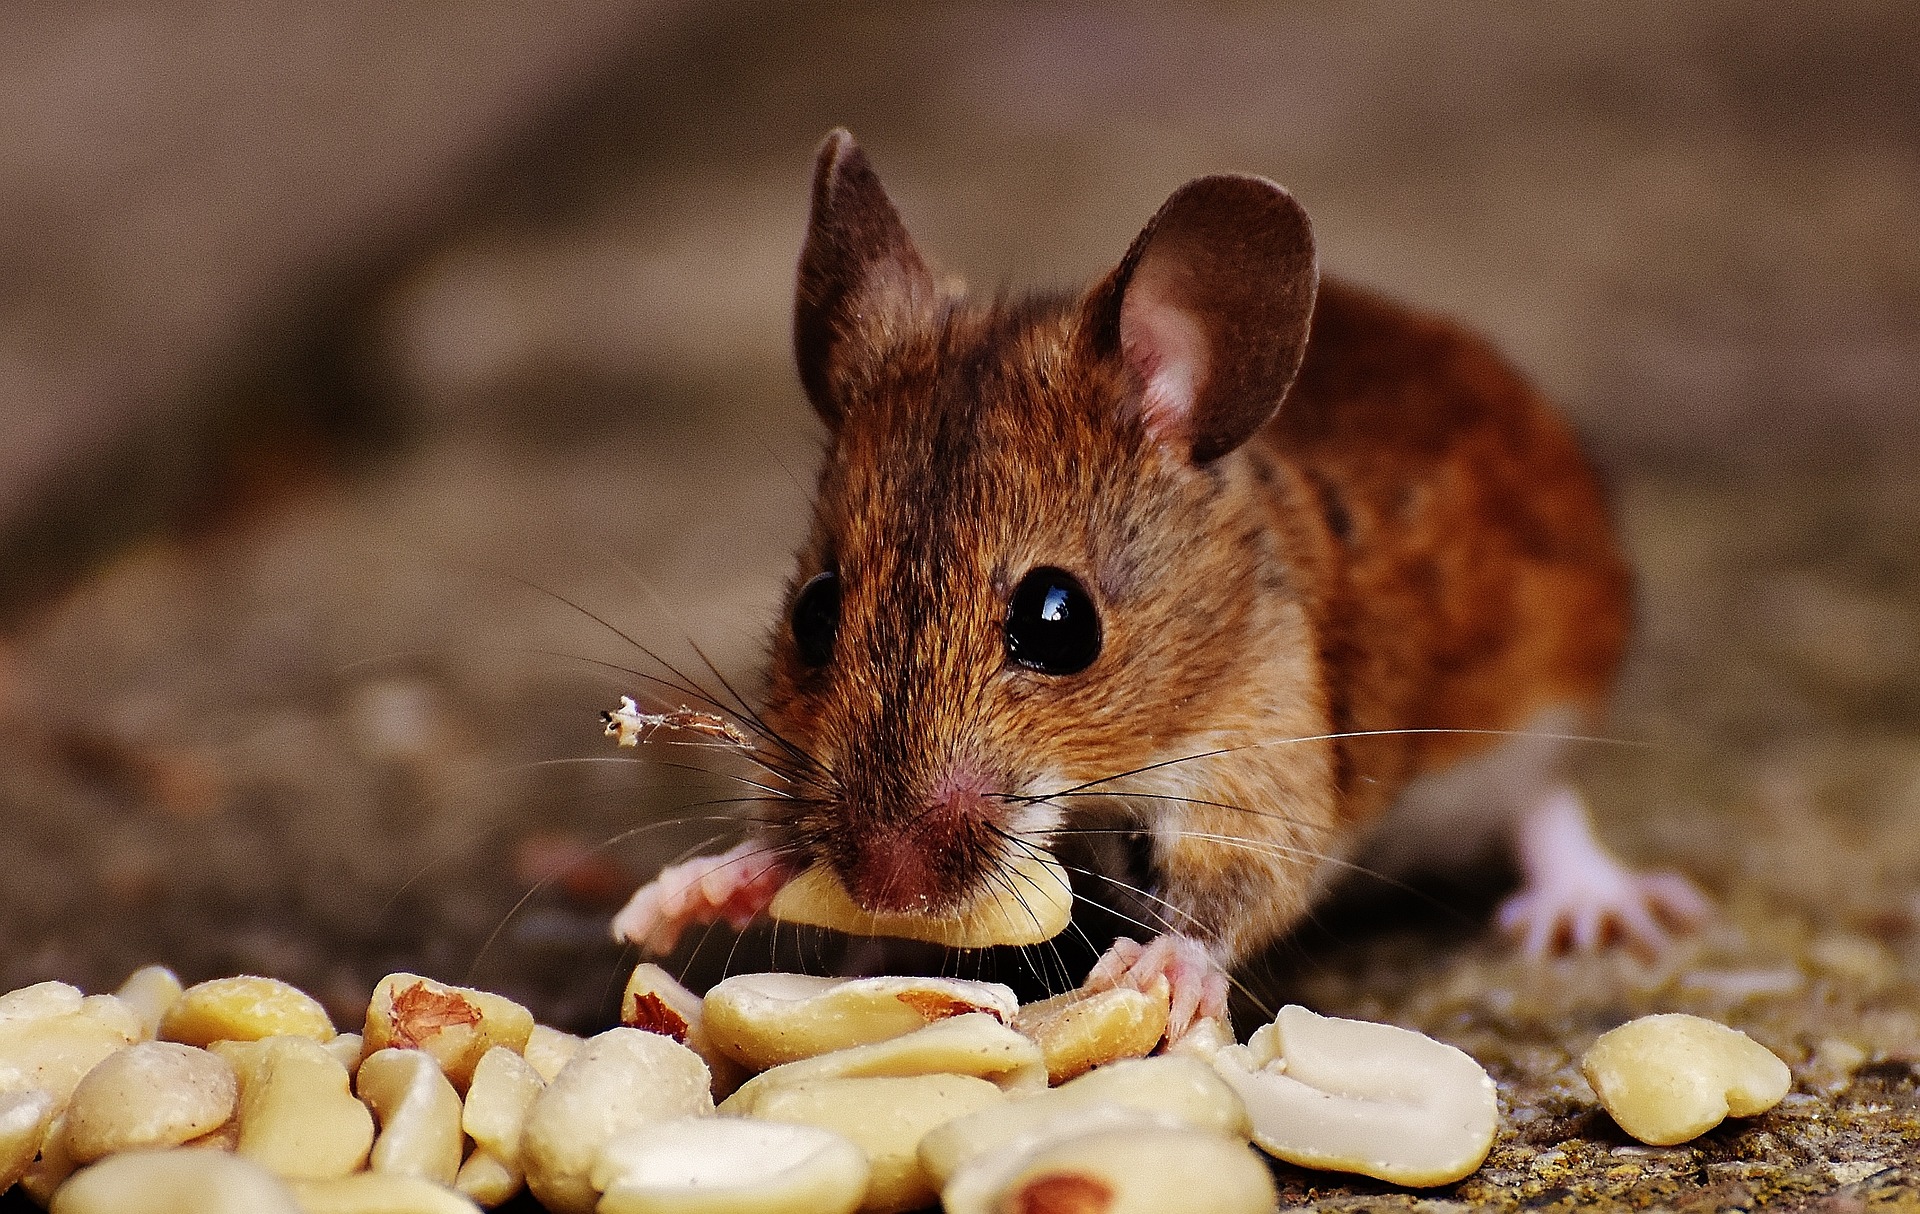 Mice eating peanutes